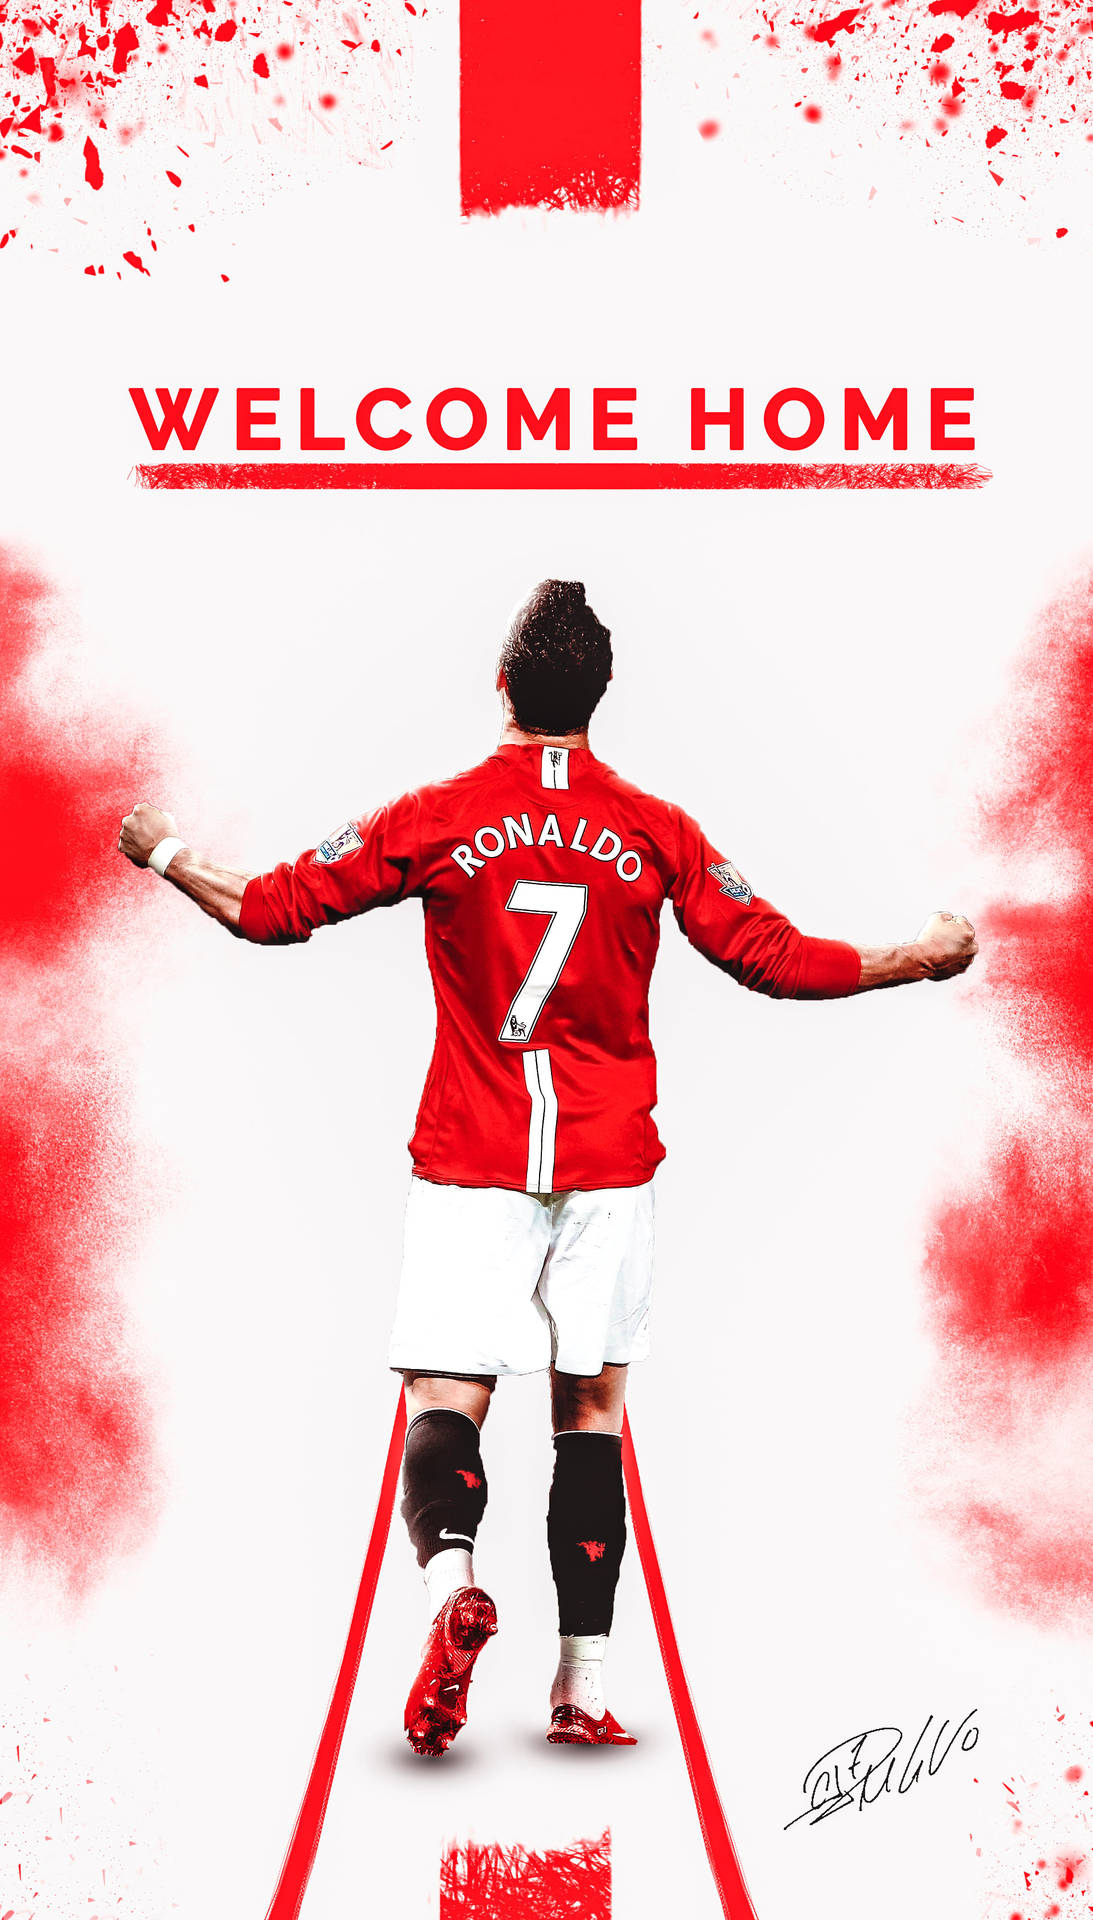 Cristiano Ronaldo Manchester United Welcome Home Background